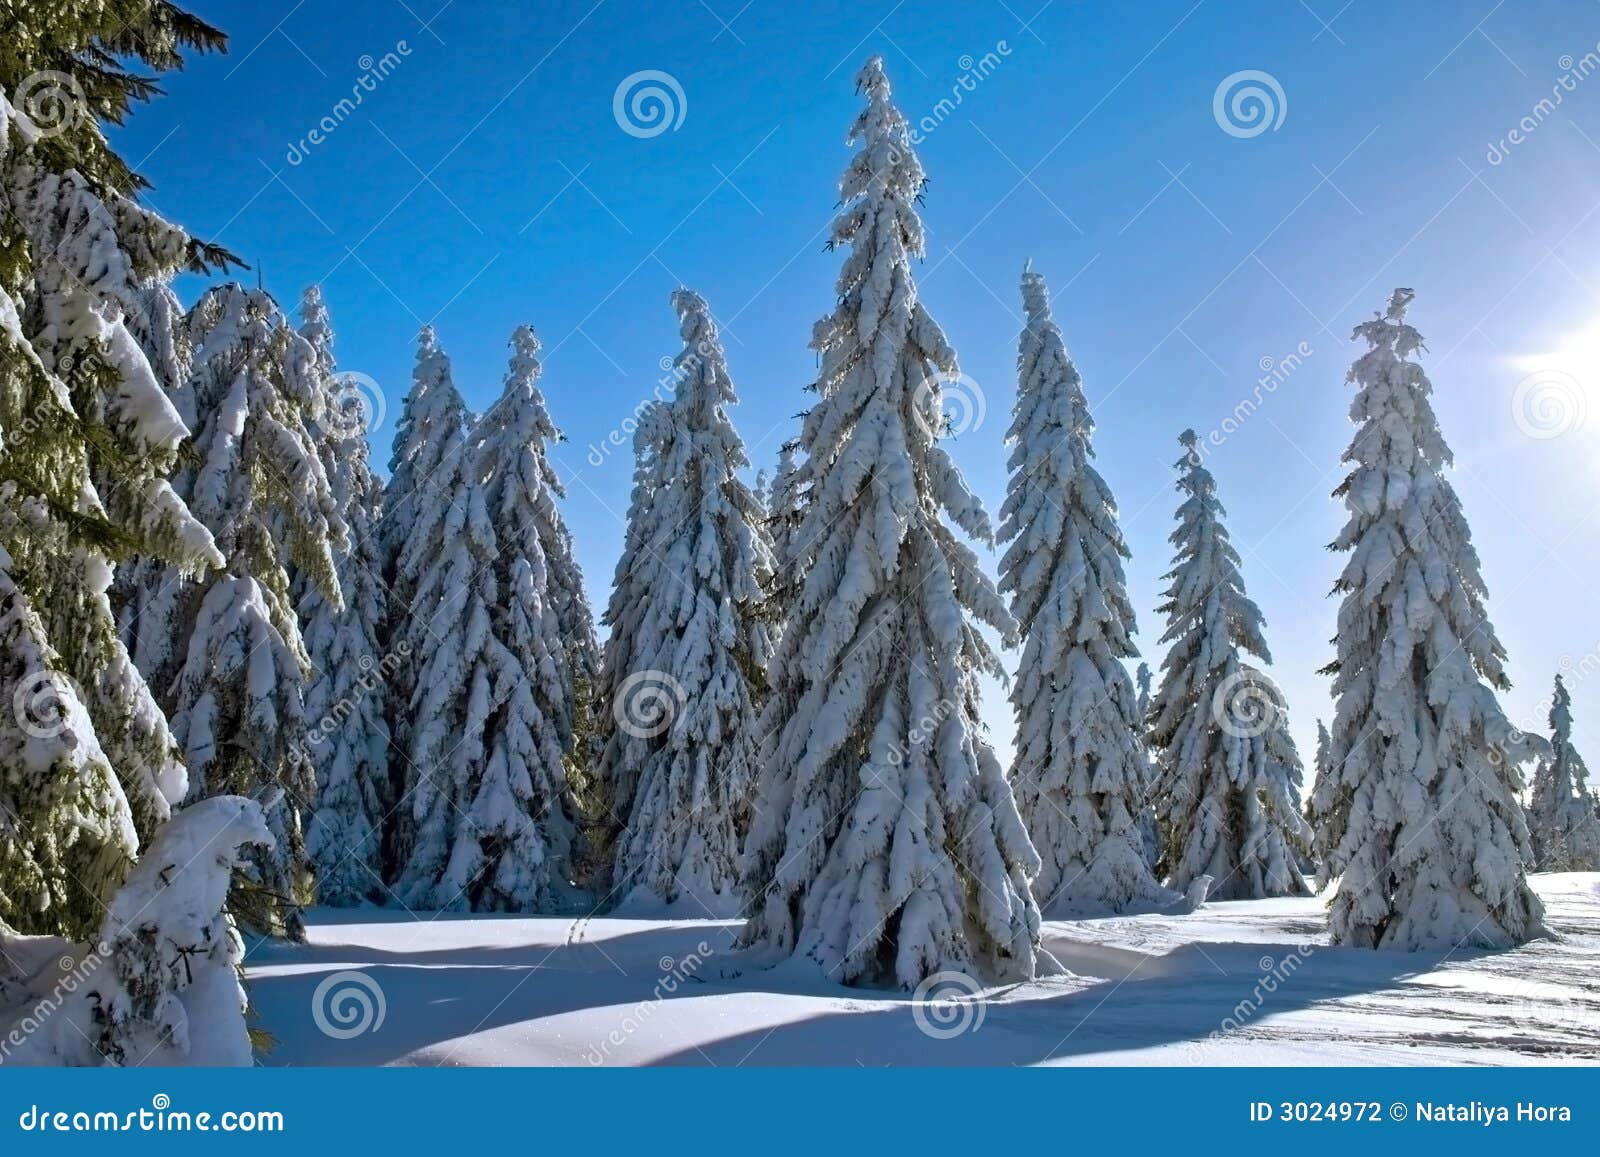 winter conifers